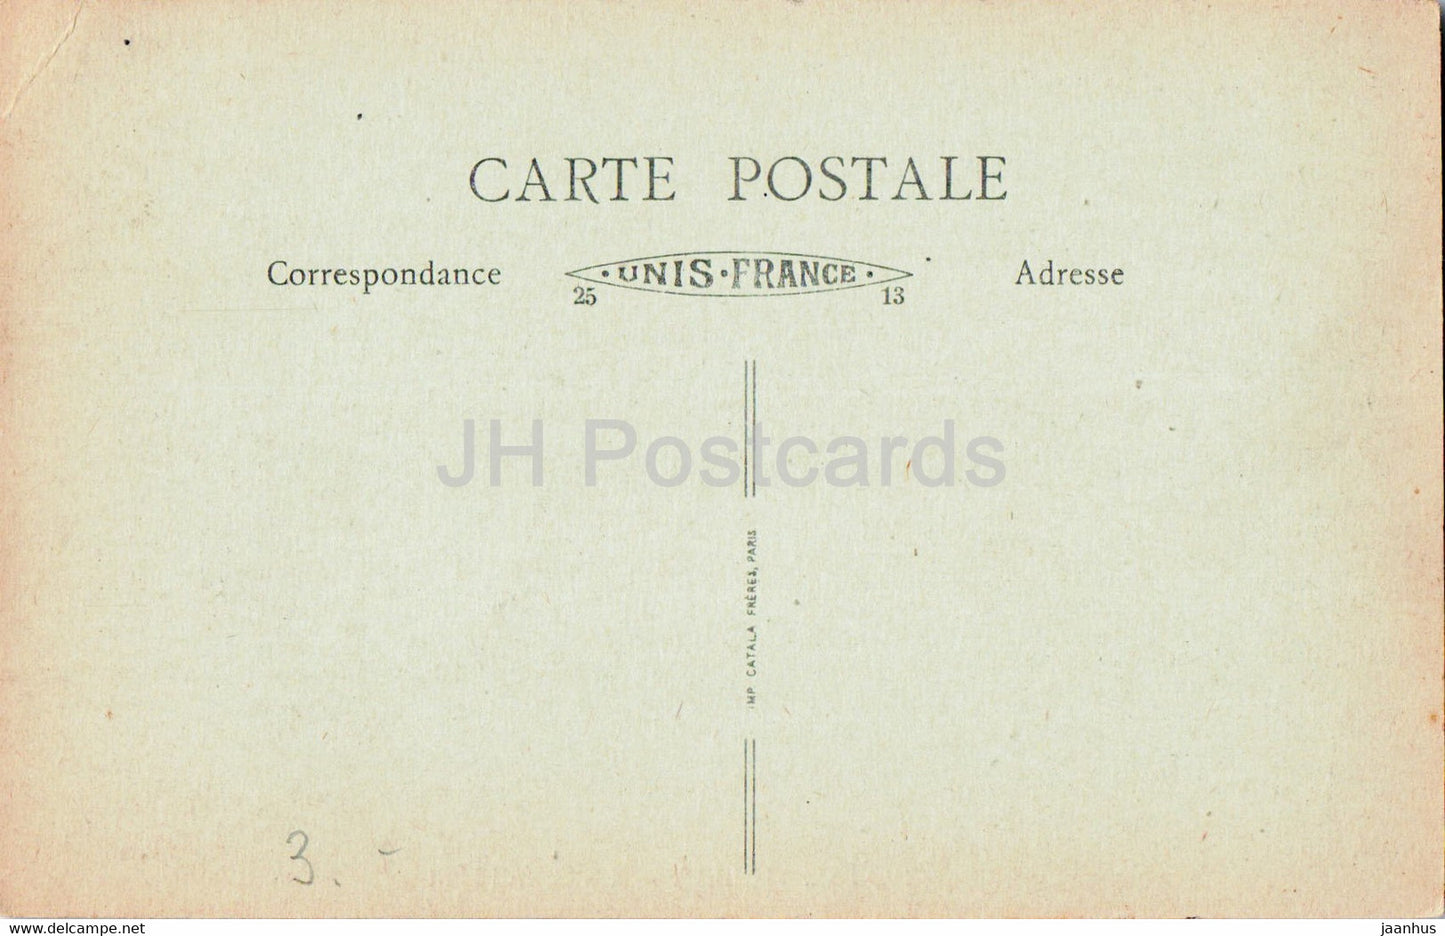 Cannes - Hôtel Gallia - Le Grand Hall - carte postale ancienne - France - inutilisée